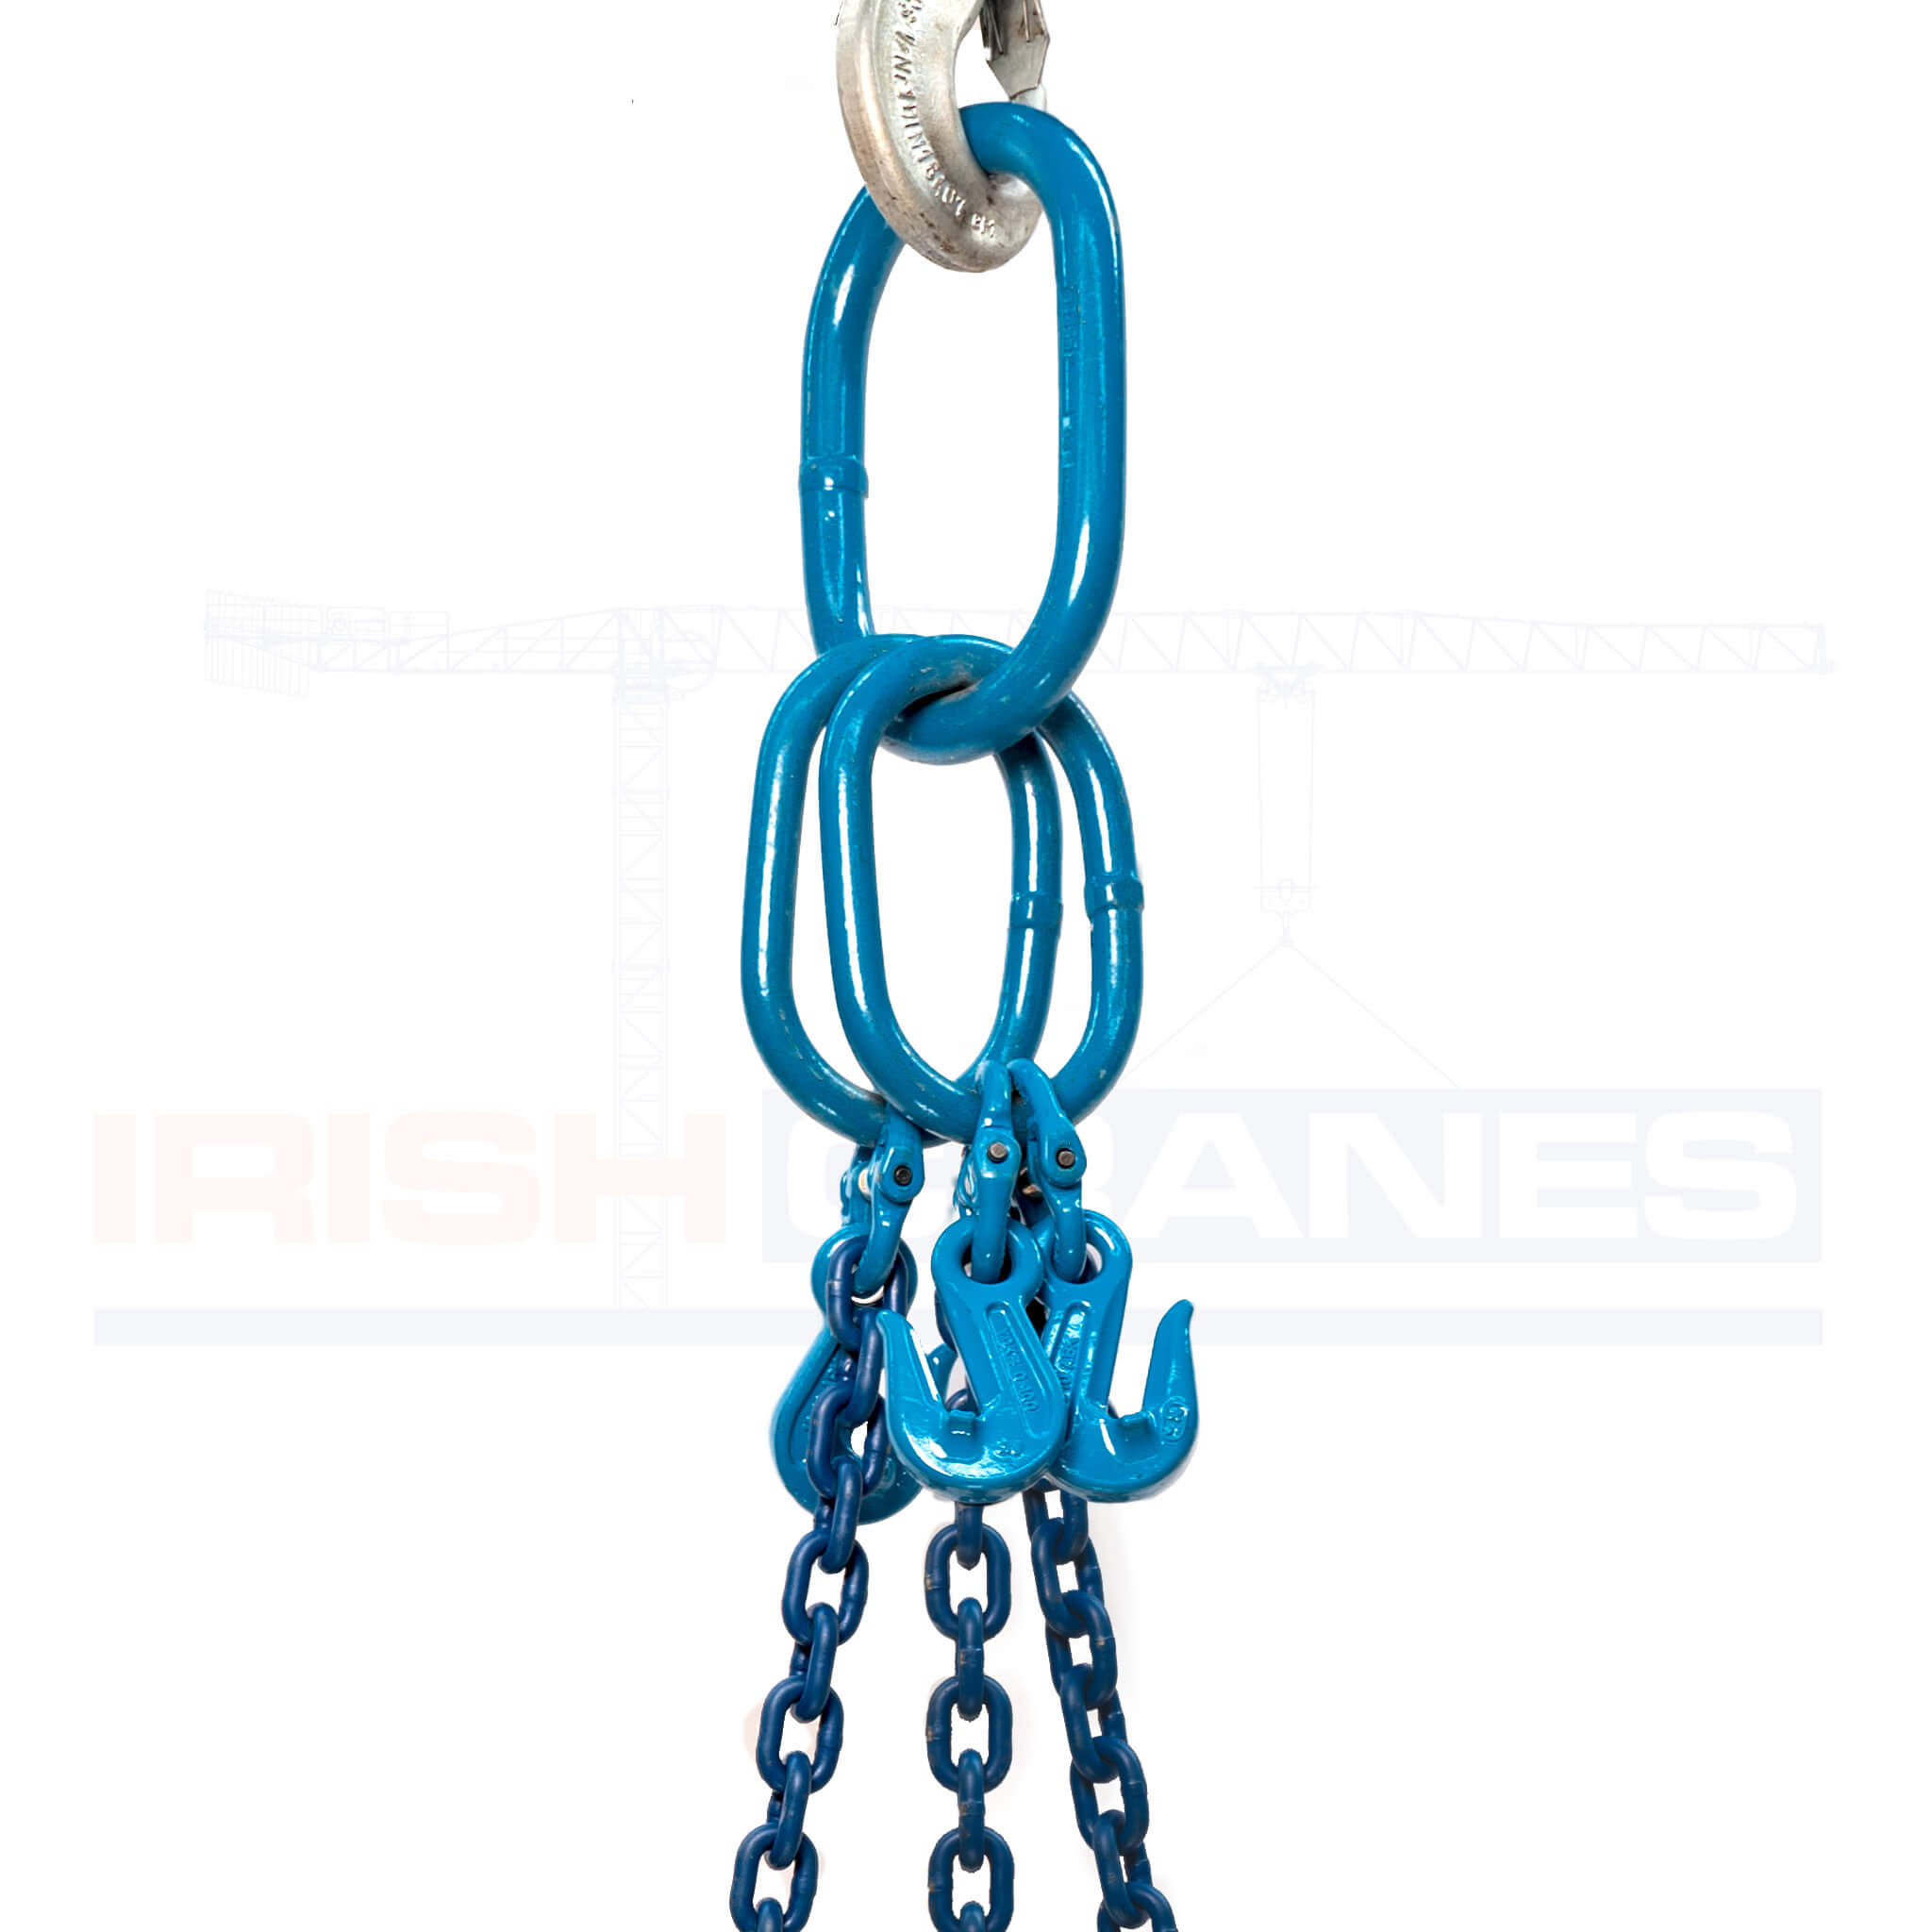 3 Leg Chain – Lifting Chain Sling Shortener